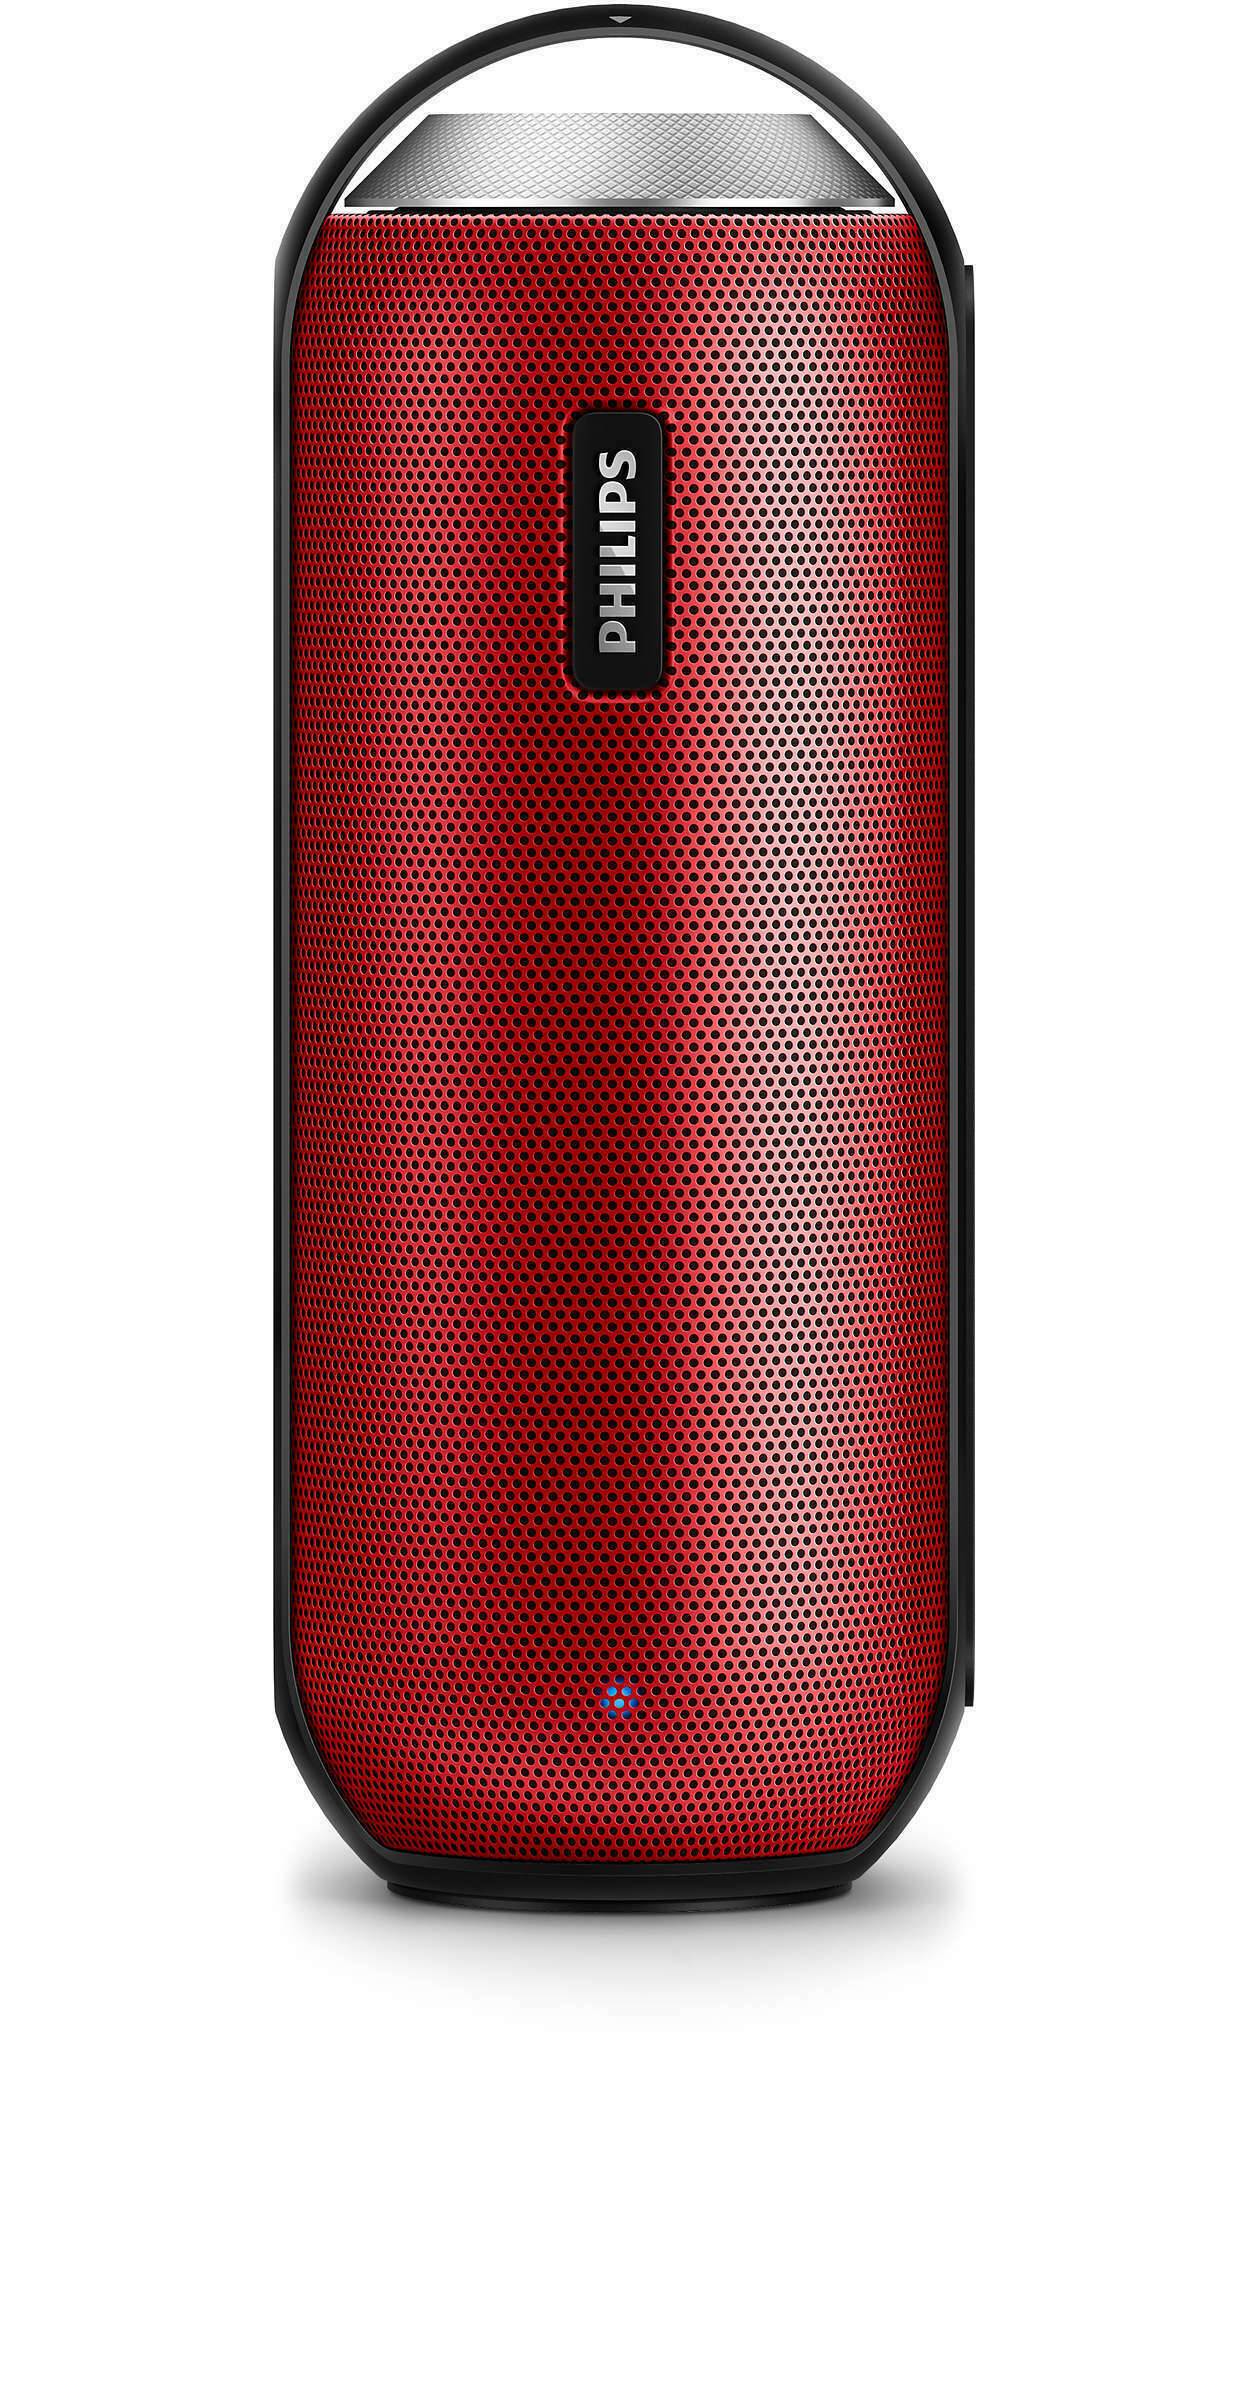 Philips Splash Proof Wireless Bluetooth Portable Speaker (Red)